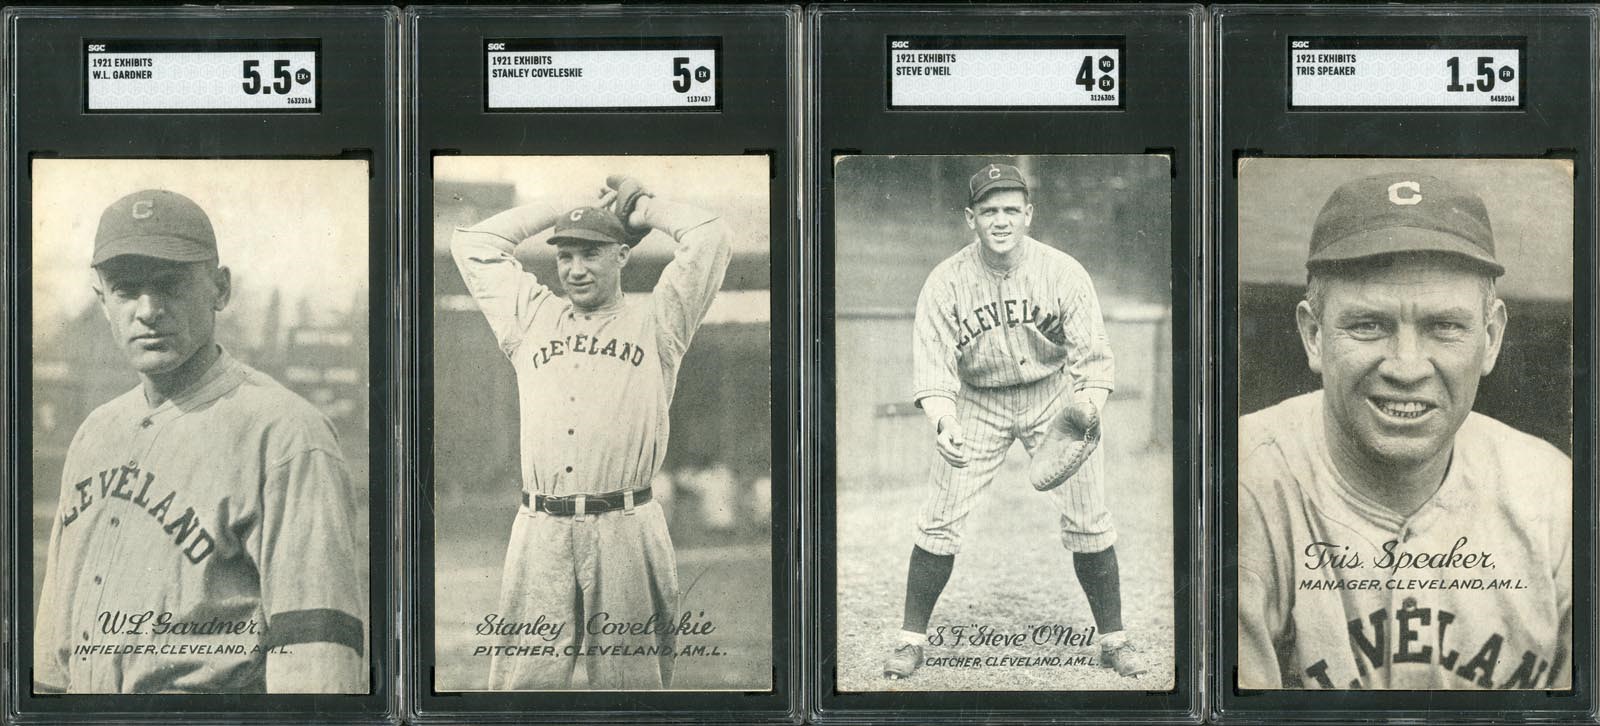 - 1921 Cleveland Indians Exhibit Card Collection (SGC)